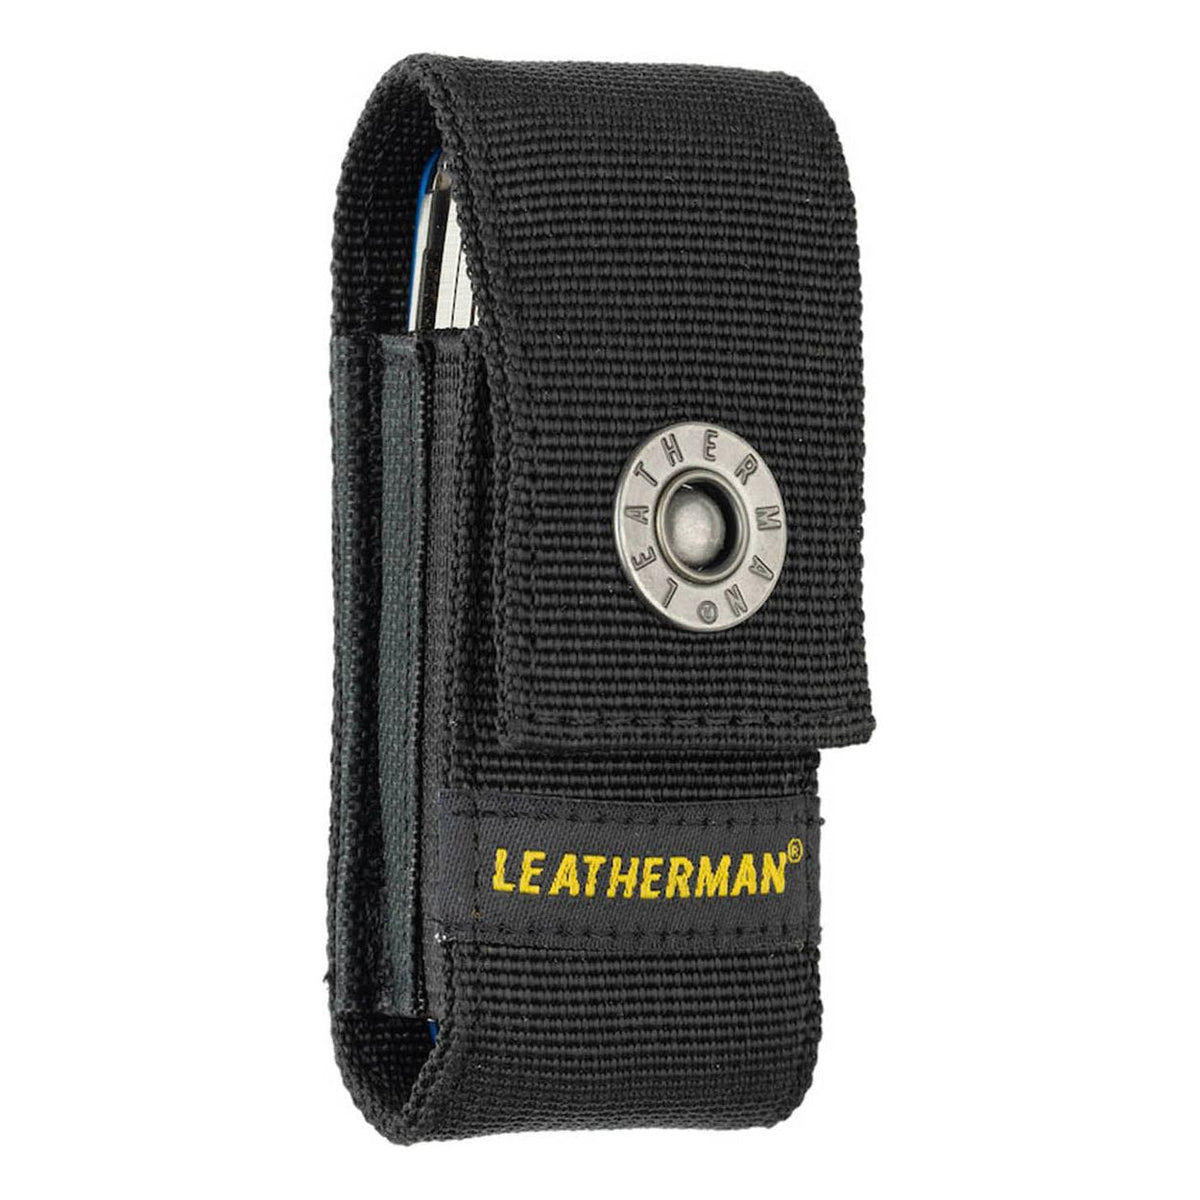 Leatherman Signal Multi Tool with Nylon Sheath - Black &amp; Silver